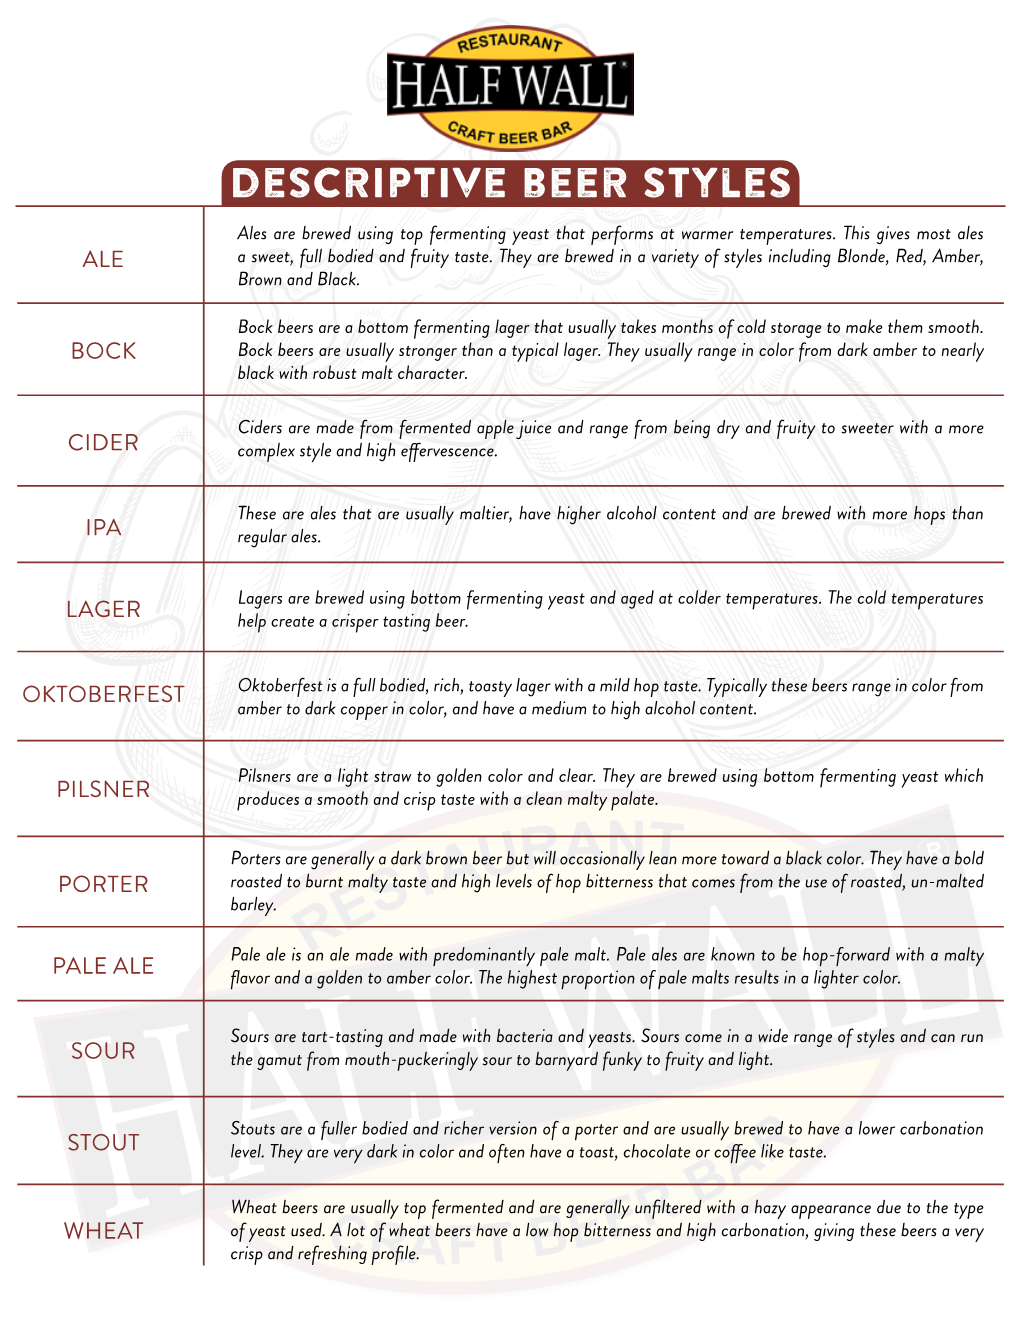 Descriptive Beer Styles